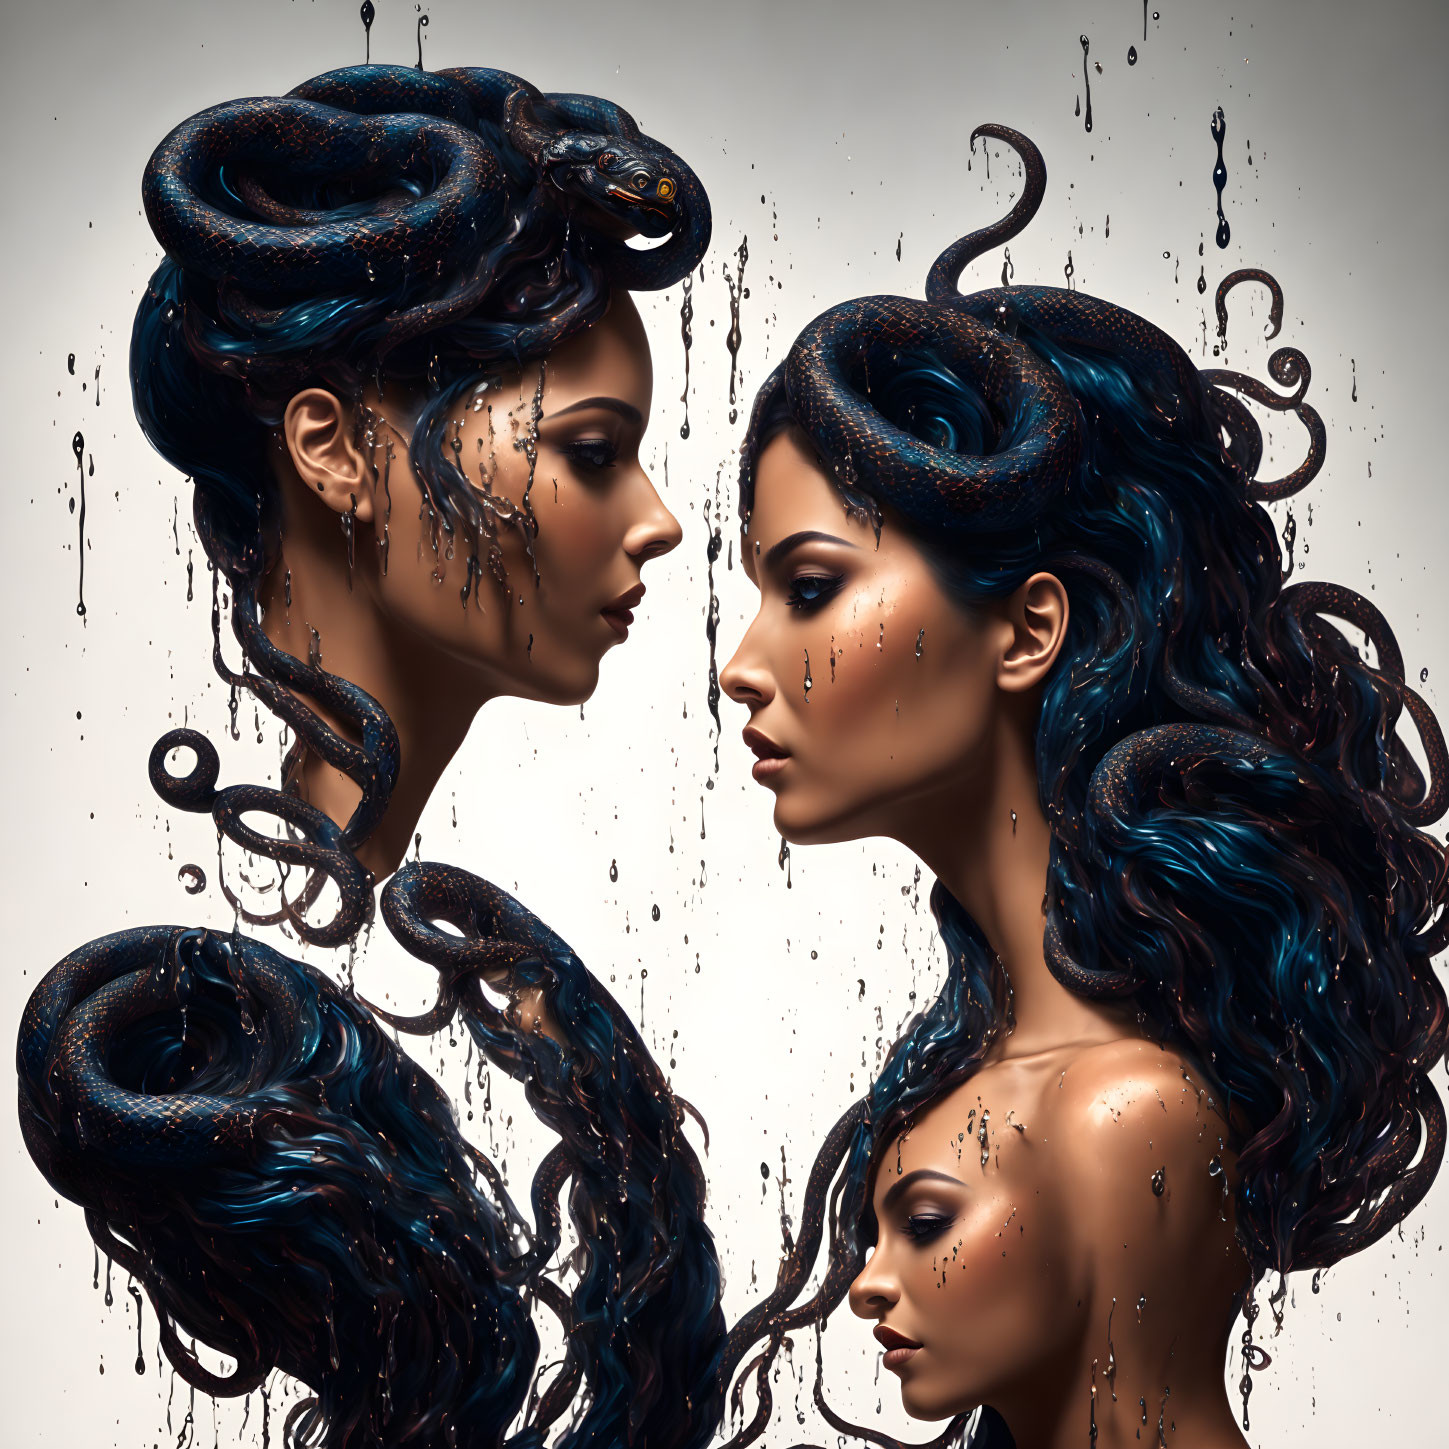 Serpentine hair women digital art with liquid droplets and gear elements